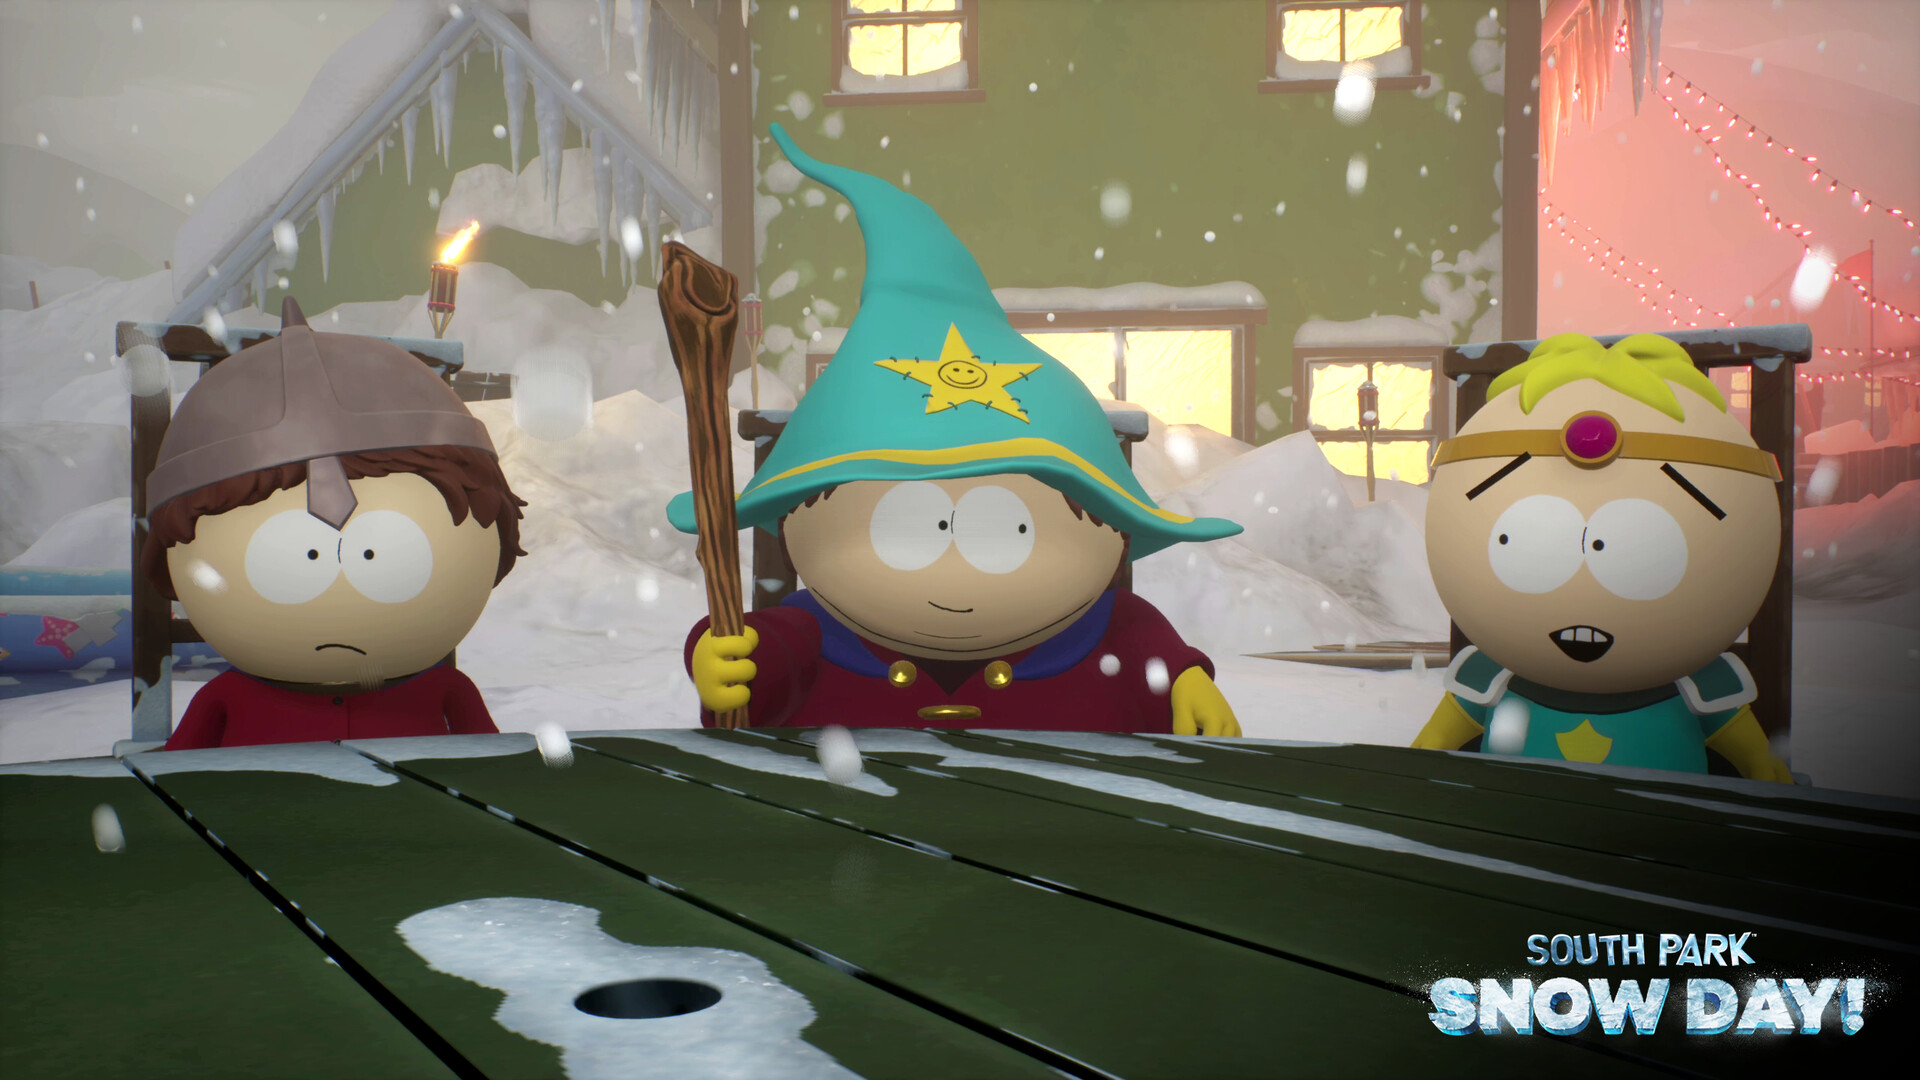 South Park Snow Day: A Hilarious Winter Adventure Awaits